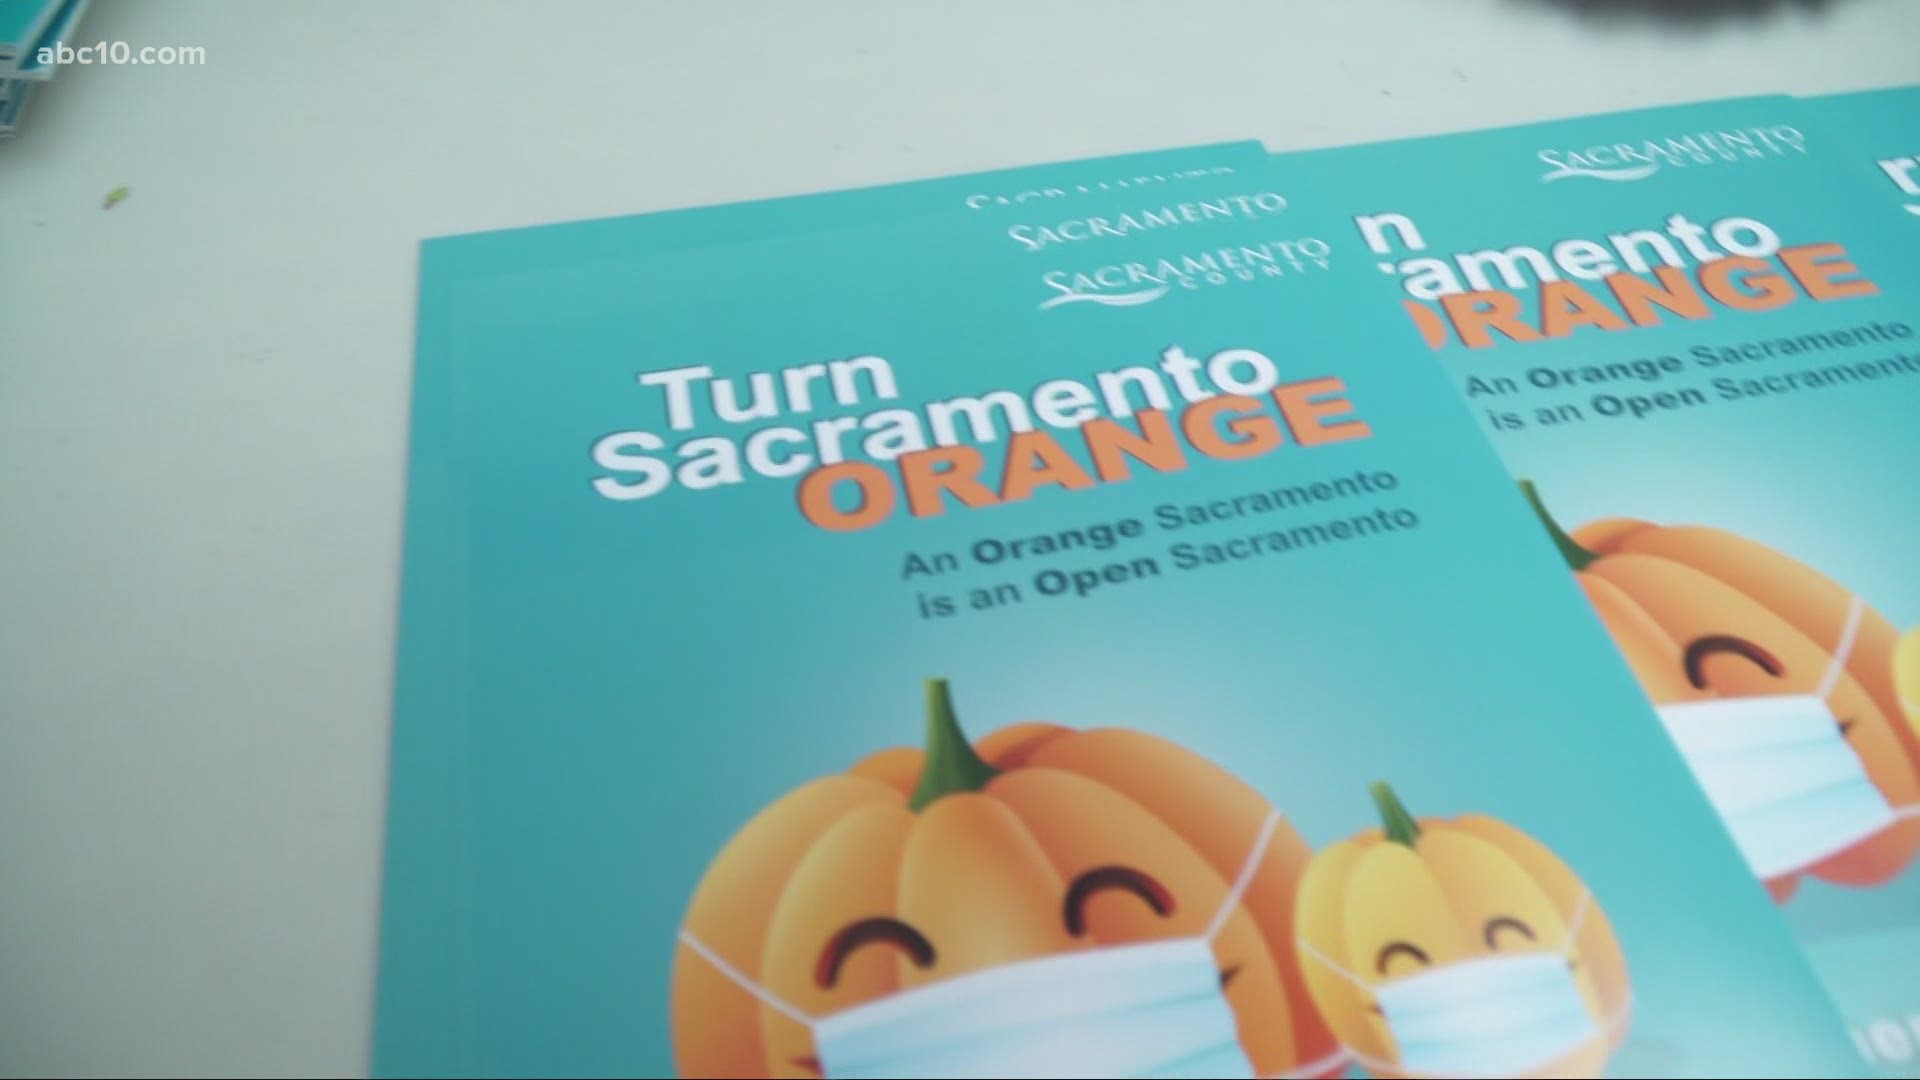 The campaign is called 'Turn Sacramento Orange' and the goal is to get Sacramento to the orange tier to minimize the threat of coronavirus.